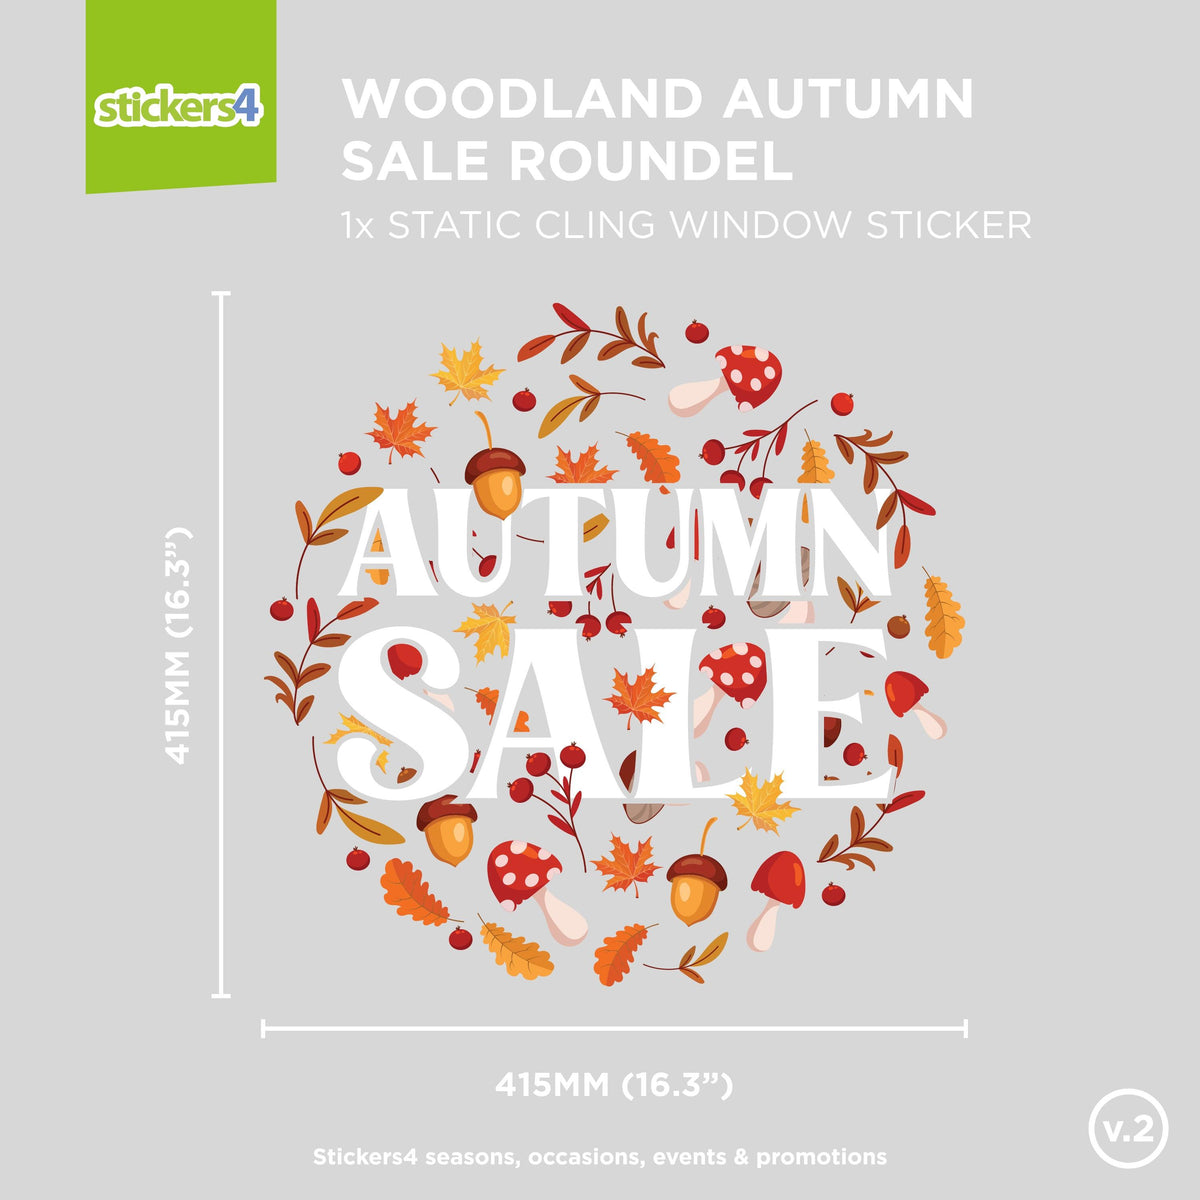 Woodland Autumn Sale Window Sticker Roundel Autumn Window Display